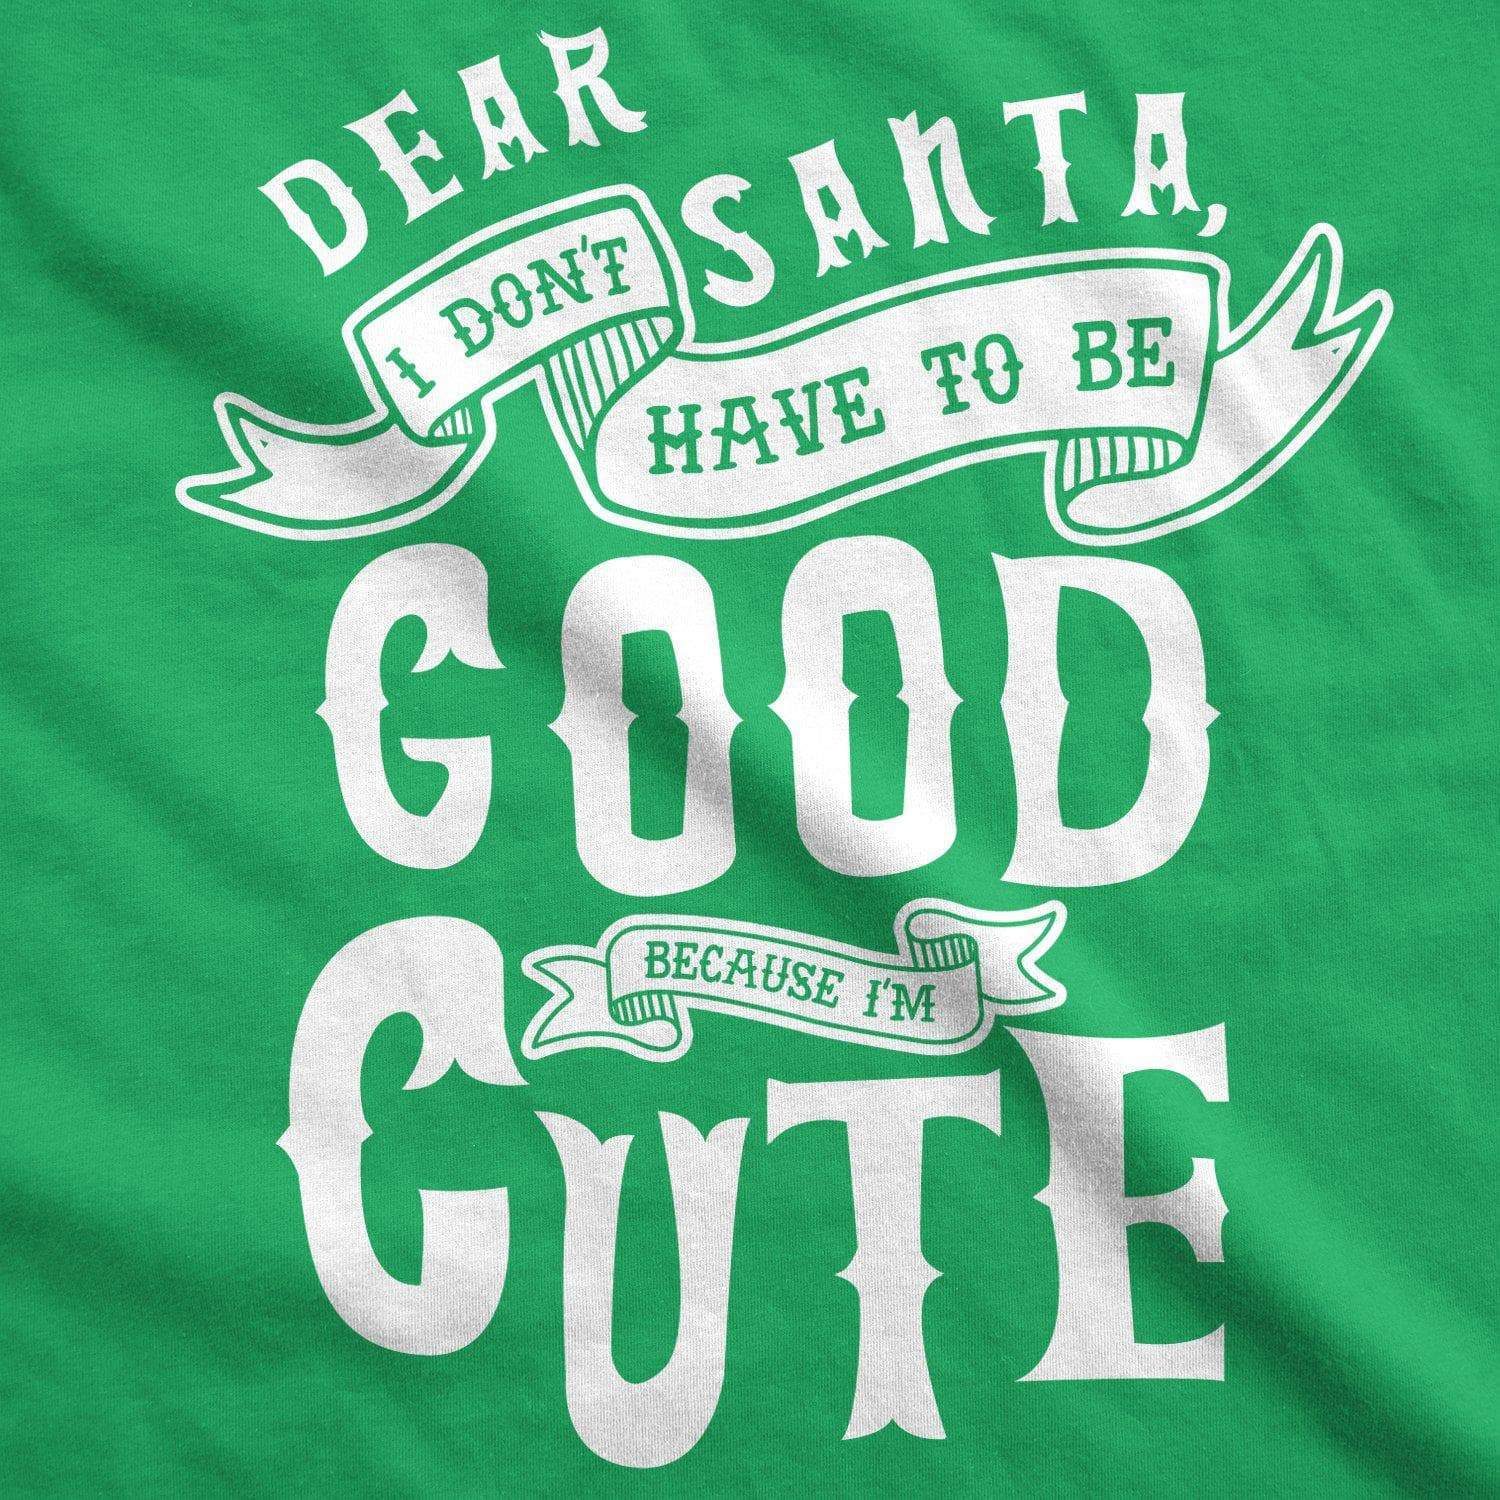 Dear Santa I Don't Have To Be Good Because I'm Cute Toddler Tshirt - Crazy Dog T-Shirts